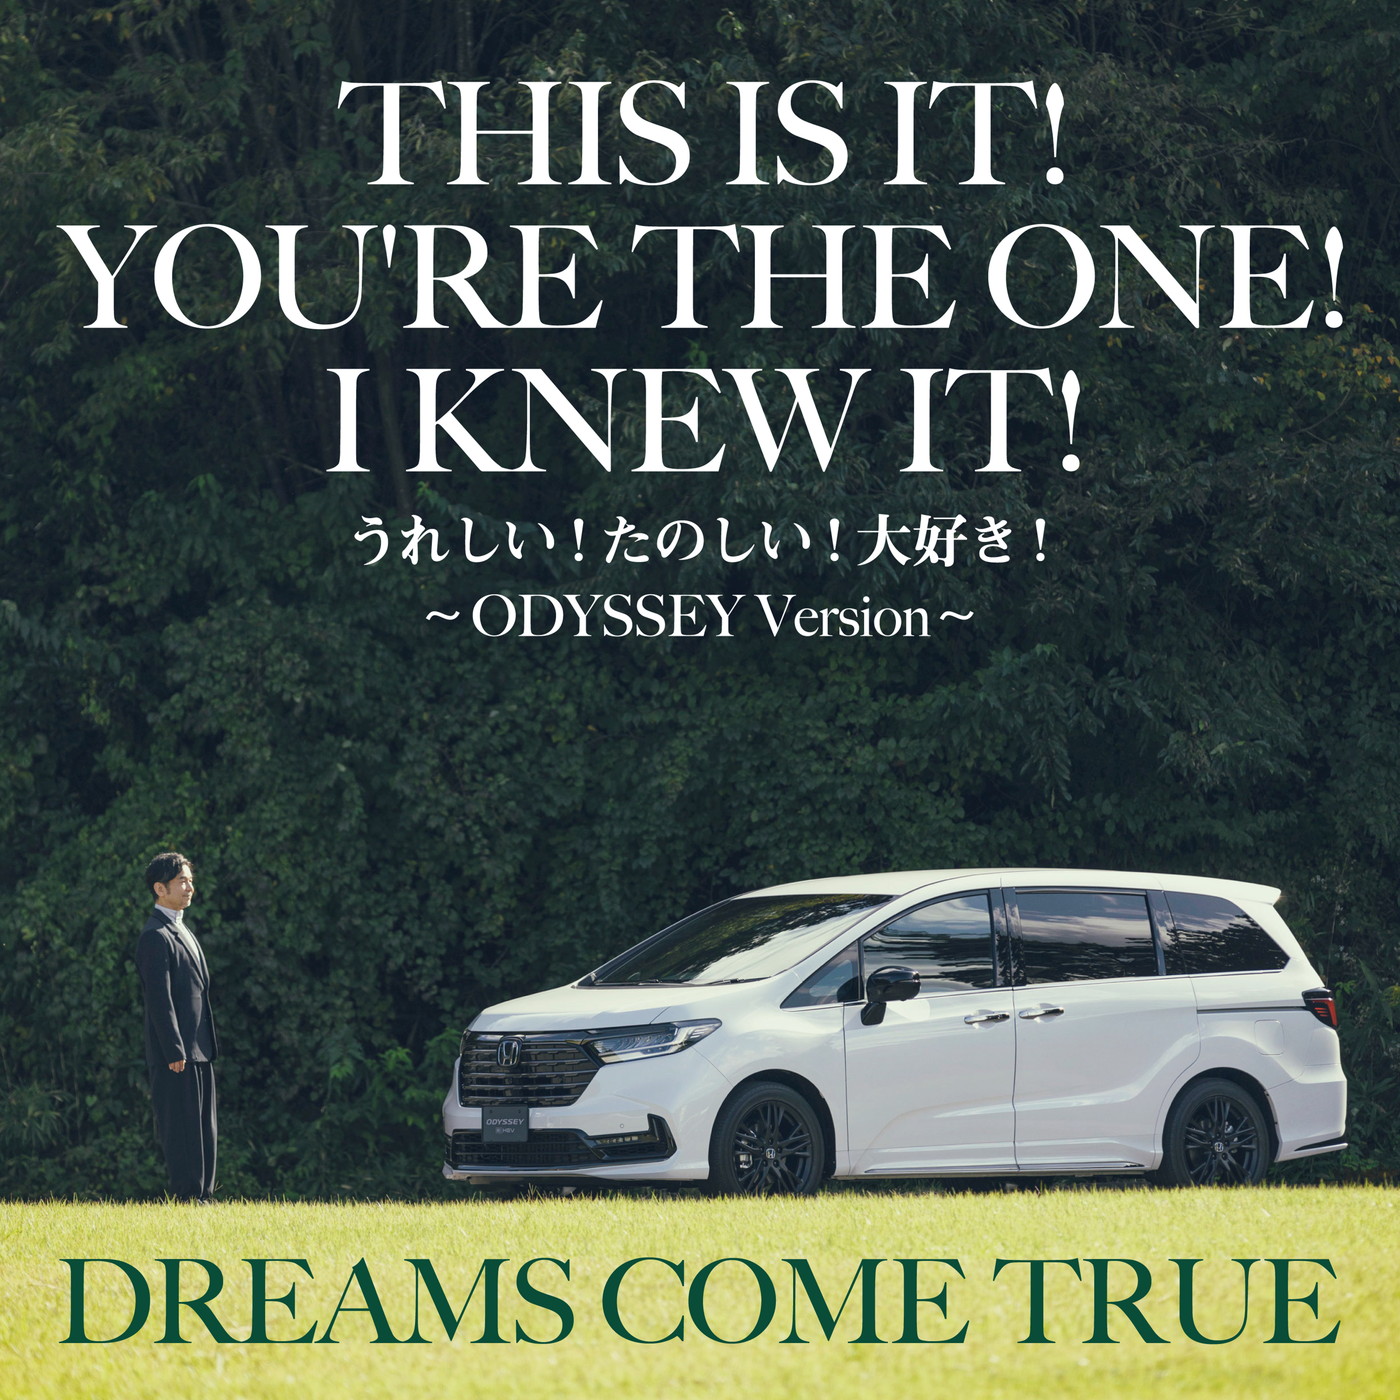 DREAMS COME TRUE、Honda新型“オデッセイ”のために提供した話題曲をデジタル配信 - 画像一覧（1/2）